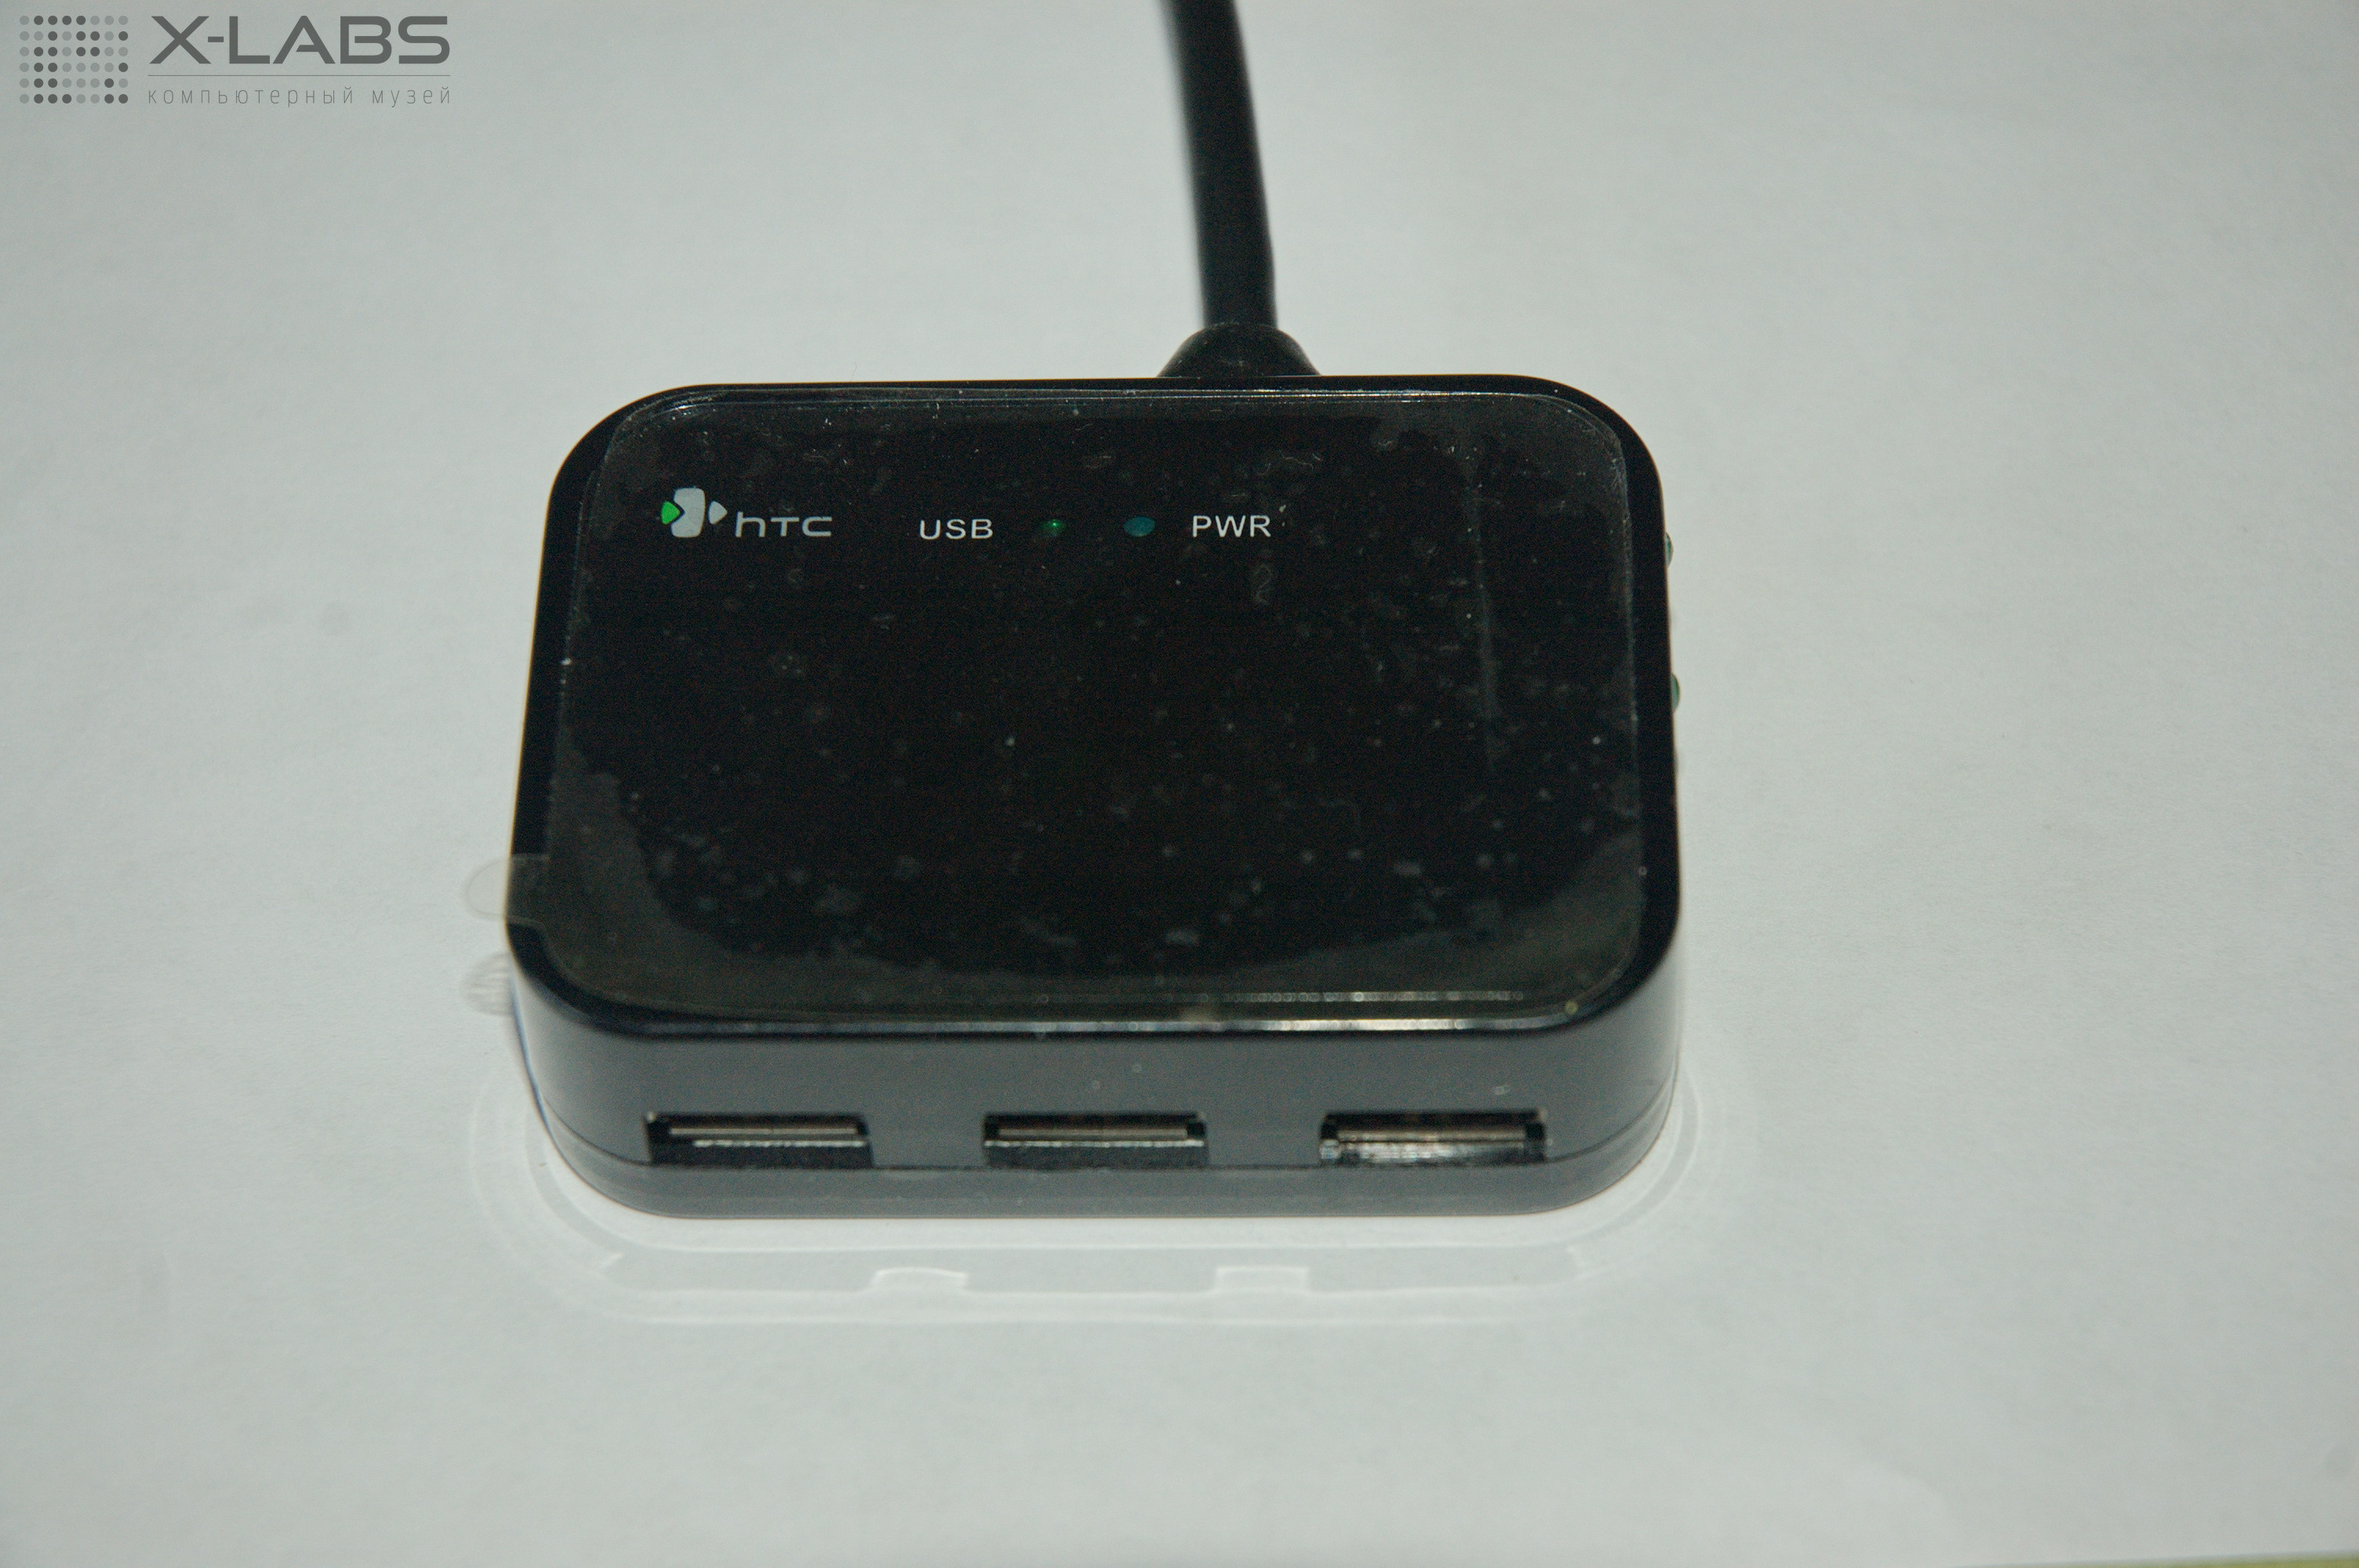 HTC USBHub/NIC